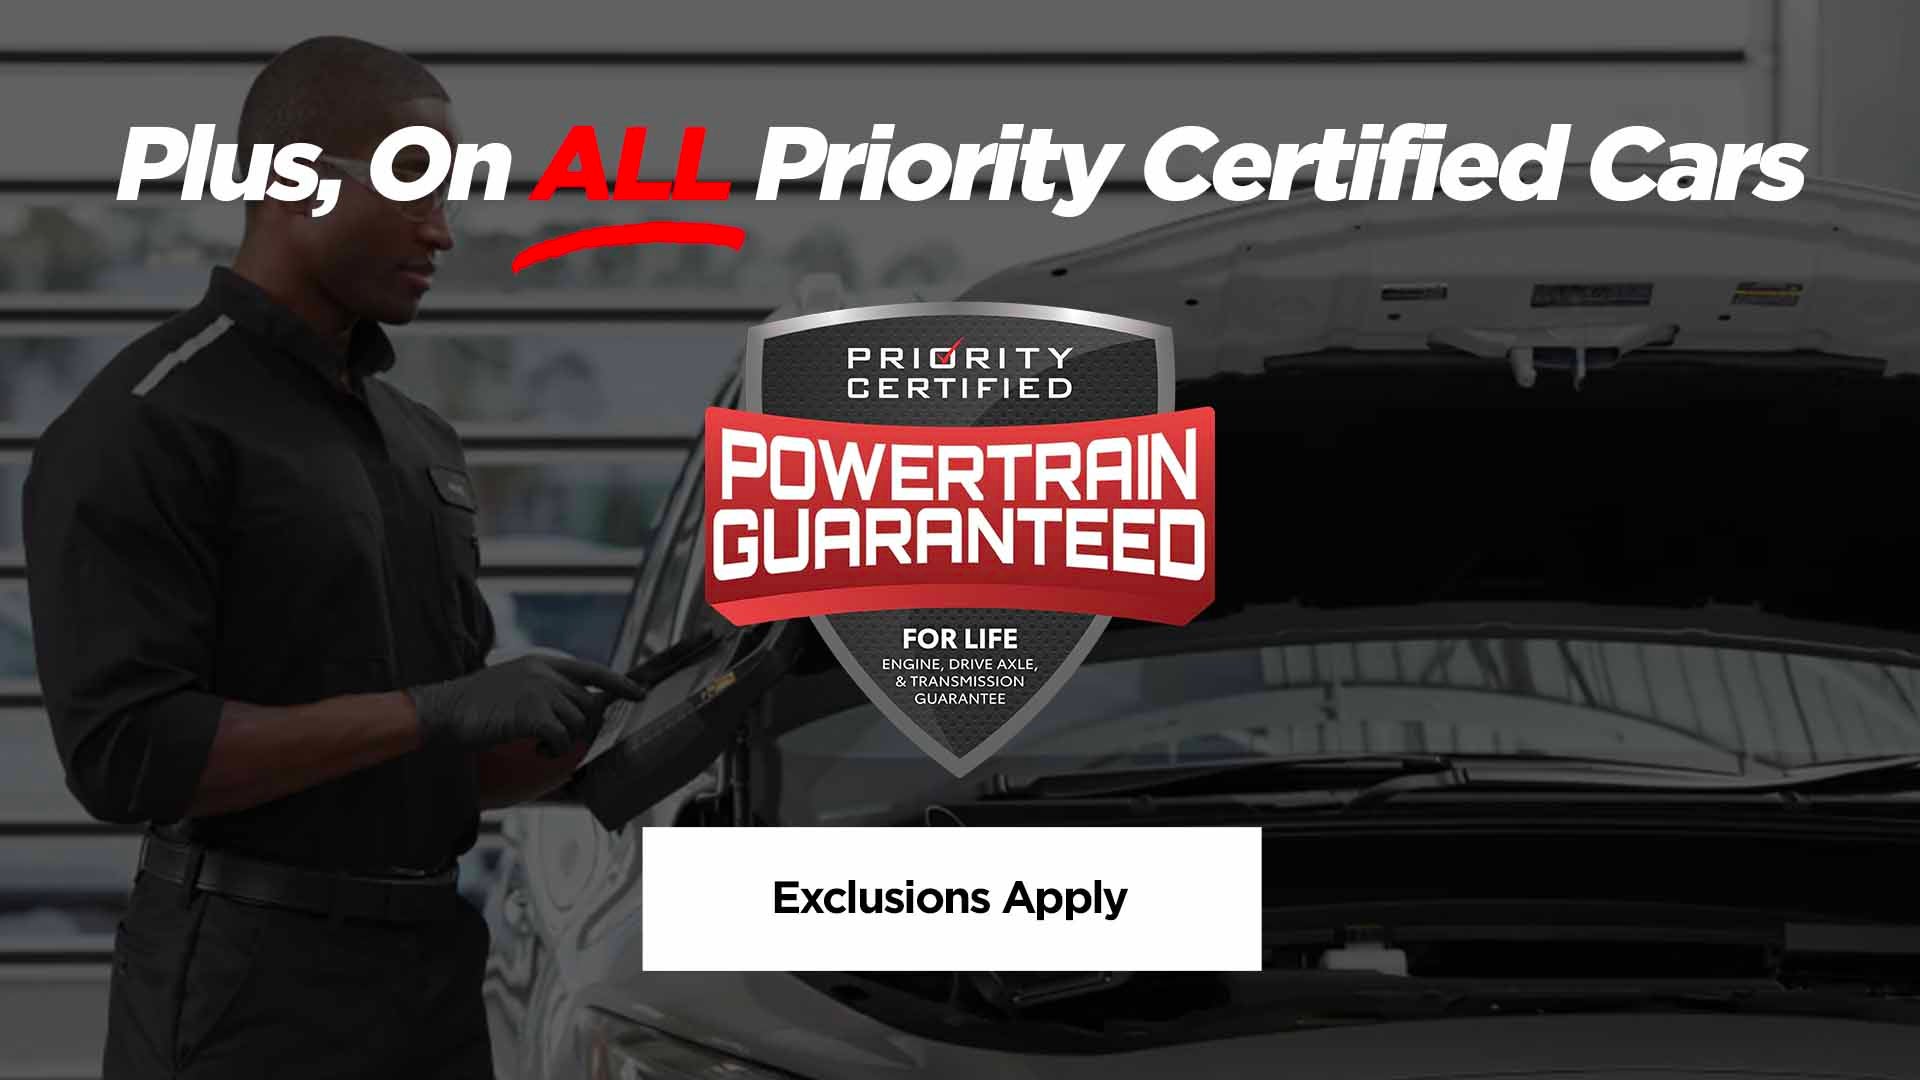 Priority Ford in Norfolk VA, Powertrain Guaranteed on Priority Certified Cars*